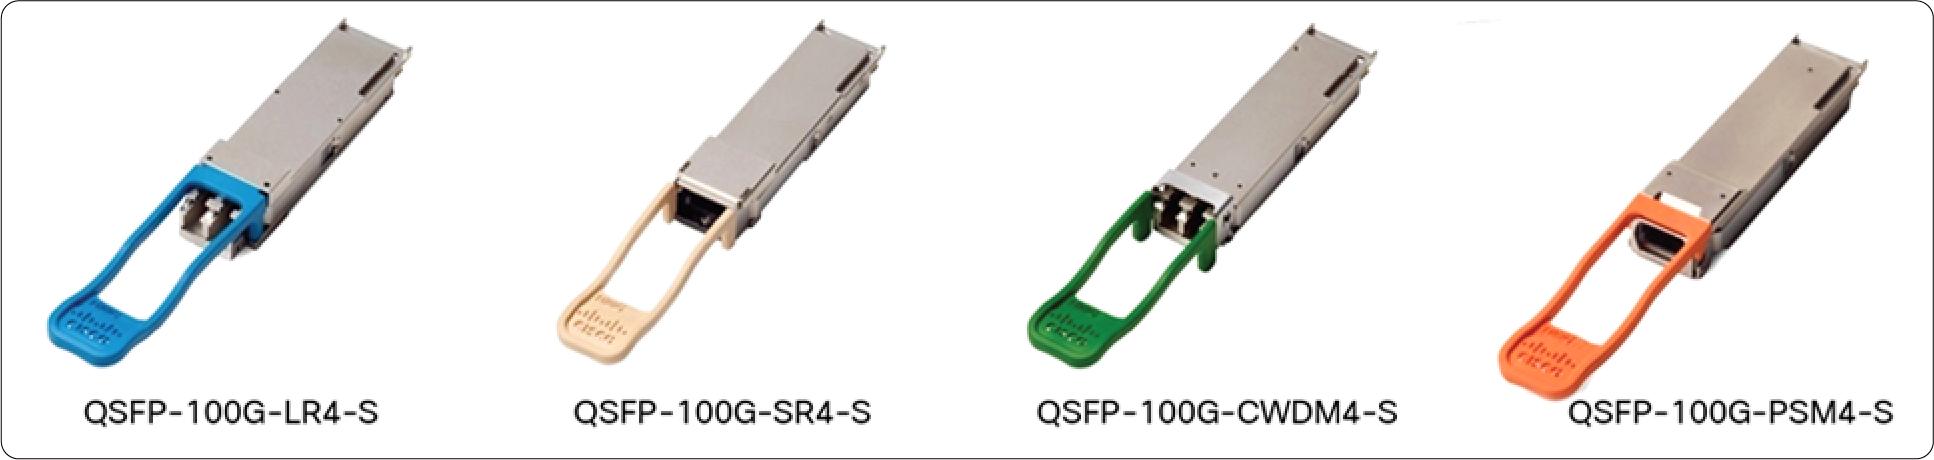 CPAK-100G-PSM4 Cisco 100 Gigabit Modules - Cisco 100GBASE QSFP Modules - 2